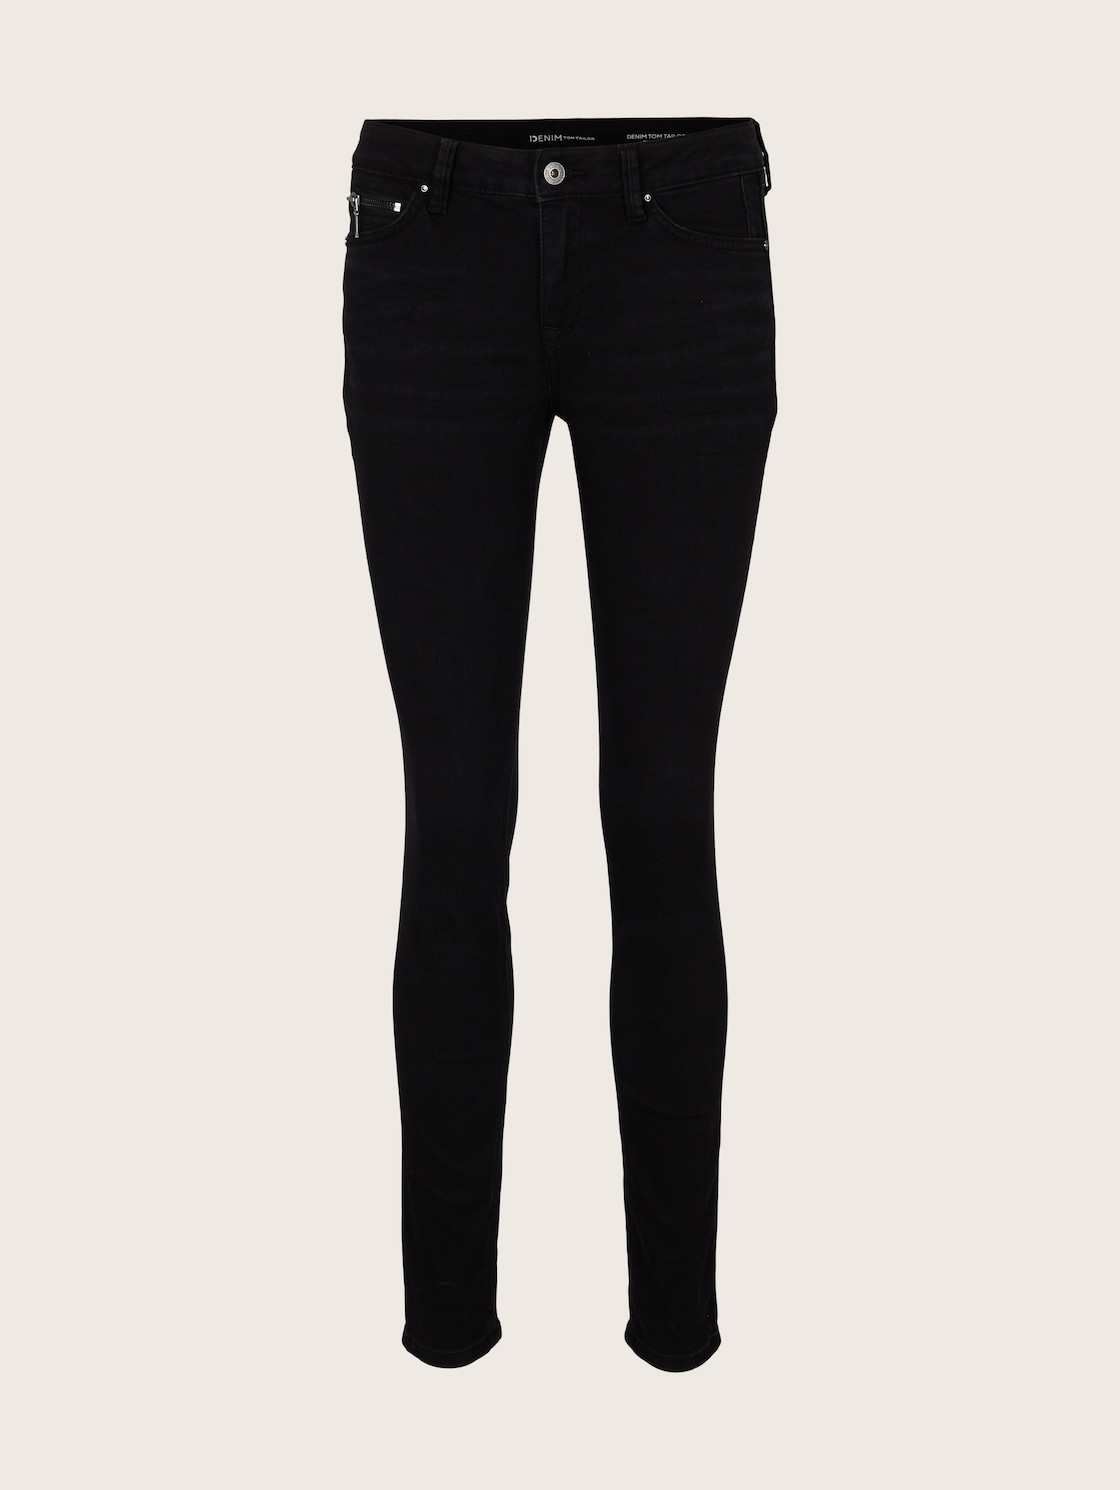 TOM TAILOR DENIM Damen Jona Extra Skinny Jeans mit recyceltem Polyester, schwarz, Uni, Gr. 32/34 von Tom Tailor Denim